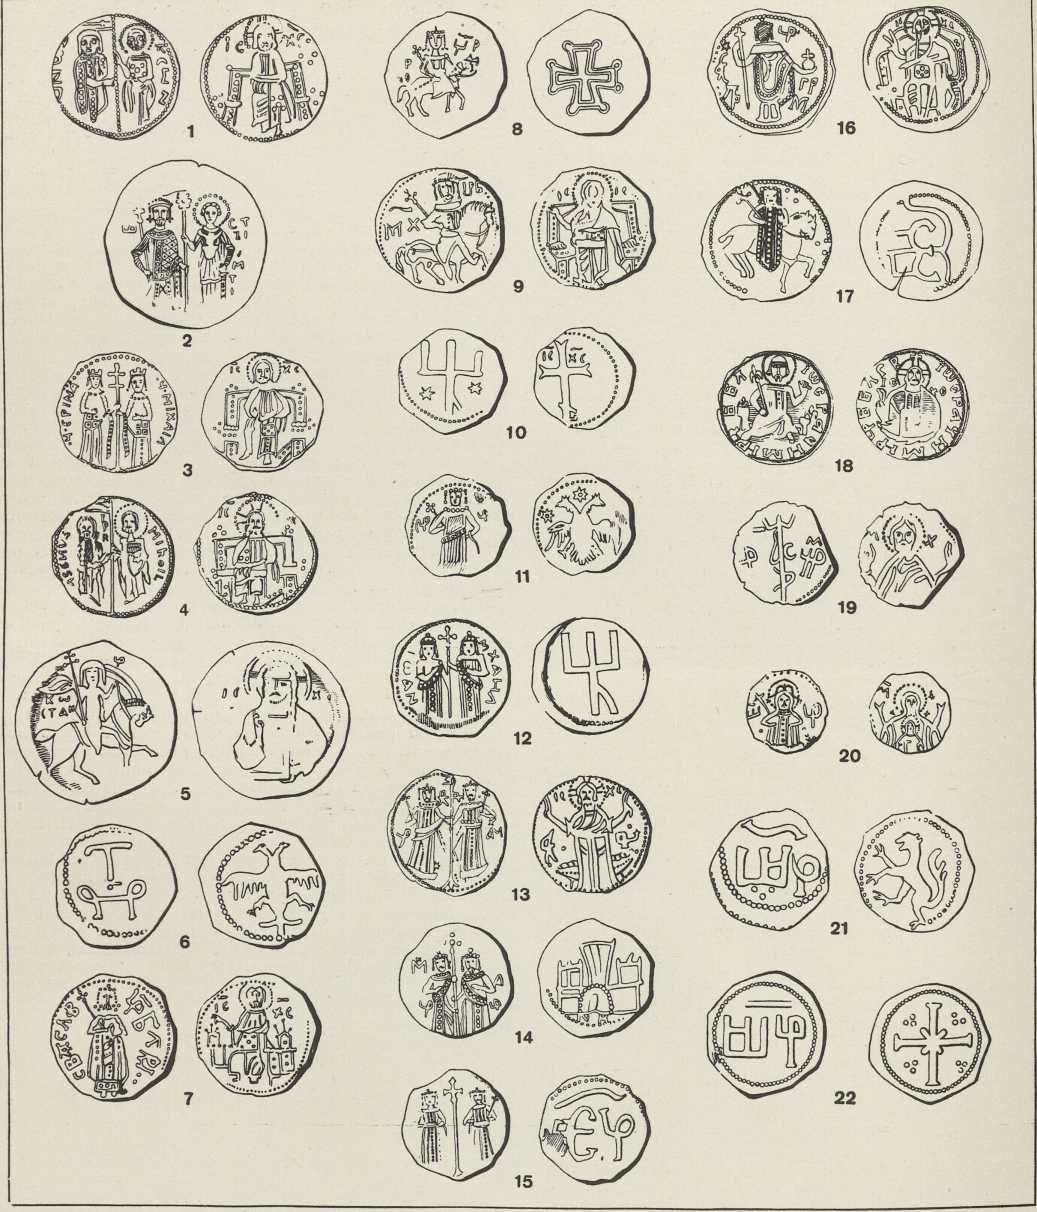 BUGARSKI NOVCI 1. Ivan Asen II. (1218—1241), srebrni n.; 2. Ivan Asen II., bakreni n.; 3. Irina i sin Mihajlo Asen (1242—1246), srebrni n.; 4. Mihajlo Asen (1246—1256), srebrni n.; 5. Konstantin Asen (1257—1277), bakreni n.; 6. Georgije Terter (1279—1292), bakreni n.; 7. Svetoslav Terter (1300—1322), srebrni n.; 8. Svetoslav Terter (1300—1322), bakreni n.; 9. Mihajlo Šišman (1323—1330), srebrni n.; 10. Mihajlo Šišman (1323—1330), bakreni n.; 11. Mihajlo Šišman (1323—1330), bakreni n.; 12. Mihajlo Šišman i sin Ivan-Stefan, bakreni n.; 13. Ivan Aleksandar i sin Mihajlo (1331— 1355), srebrni n.; 14. Ivan Aleksandar i sin Mihajlo (1331—1355), bakreni n.; 15. Ivan Aleksandar i sin Mihajlo (1331—1355), bakreni n.; 16. Ivan Aleksandar (sam, 1355—1371), srebrni n.; 17. Ivan Aleksandar (sam, 1351—1371), bakreni n.; 18. Ivan Sracimir (1360—1396), srebrni groš; 19. Ivan Sracimir (1360—1396), bakreni n.; 20. Ivan Šišman (1371—1393), srebrna aspra; 21. Ivan Šišman (1371—1393), crvena aspra; 22. Ivan Šišman (1371—1393), crvena aspra